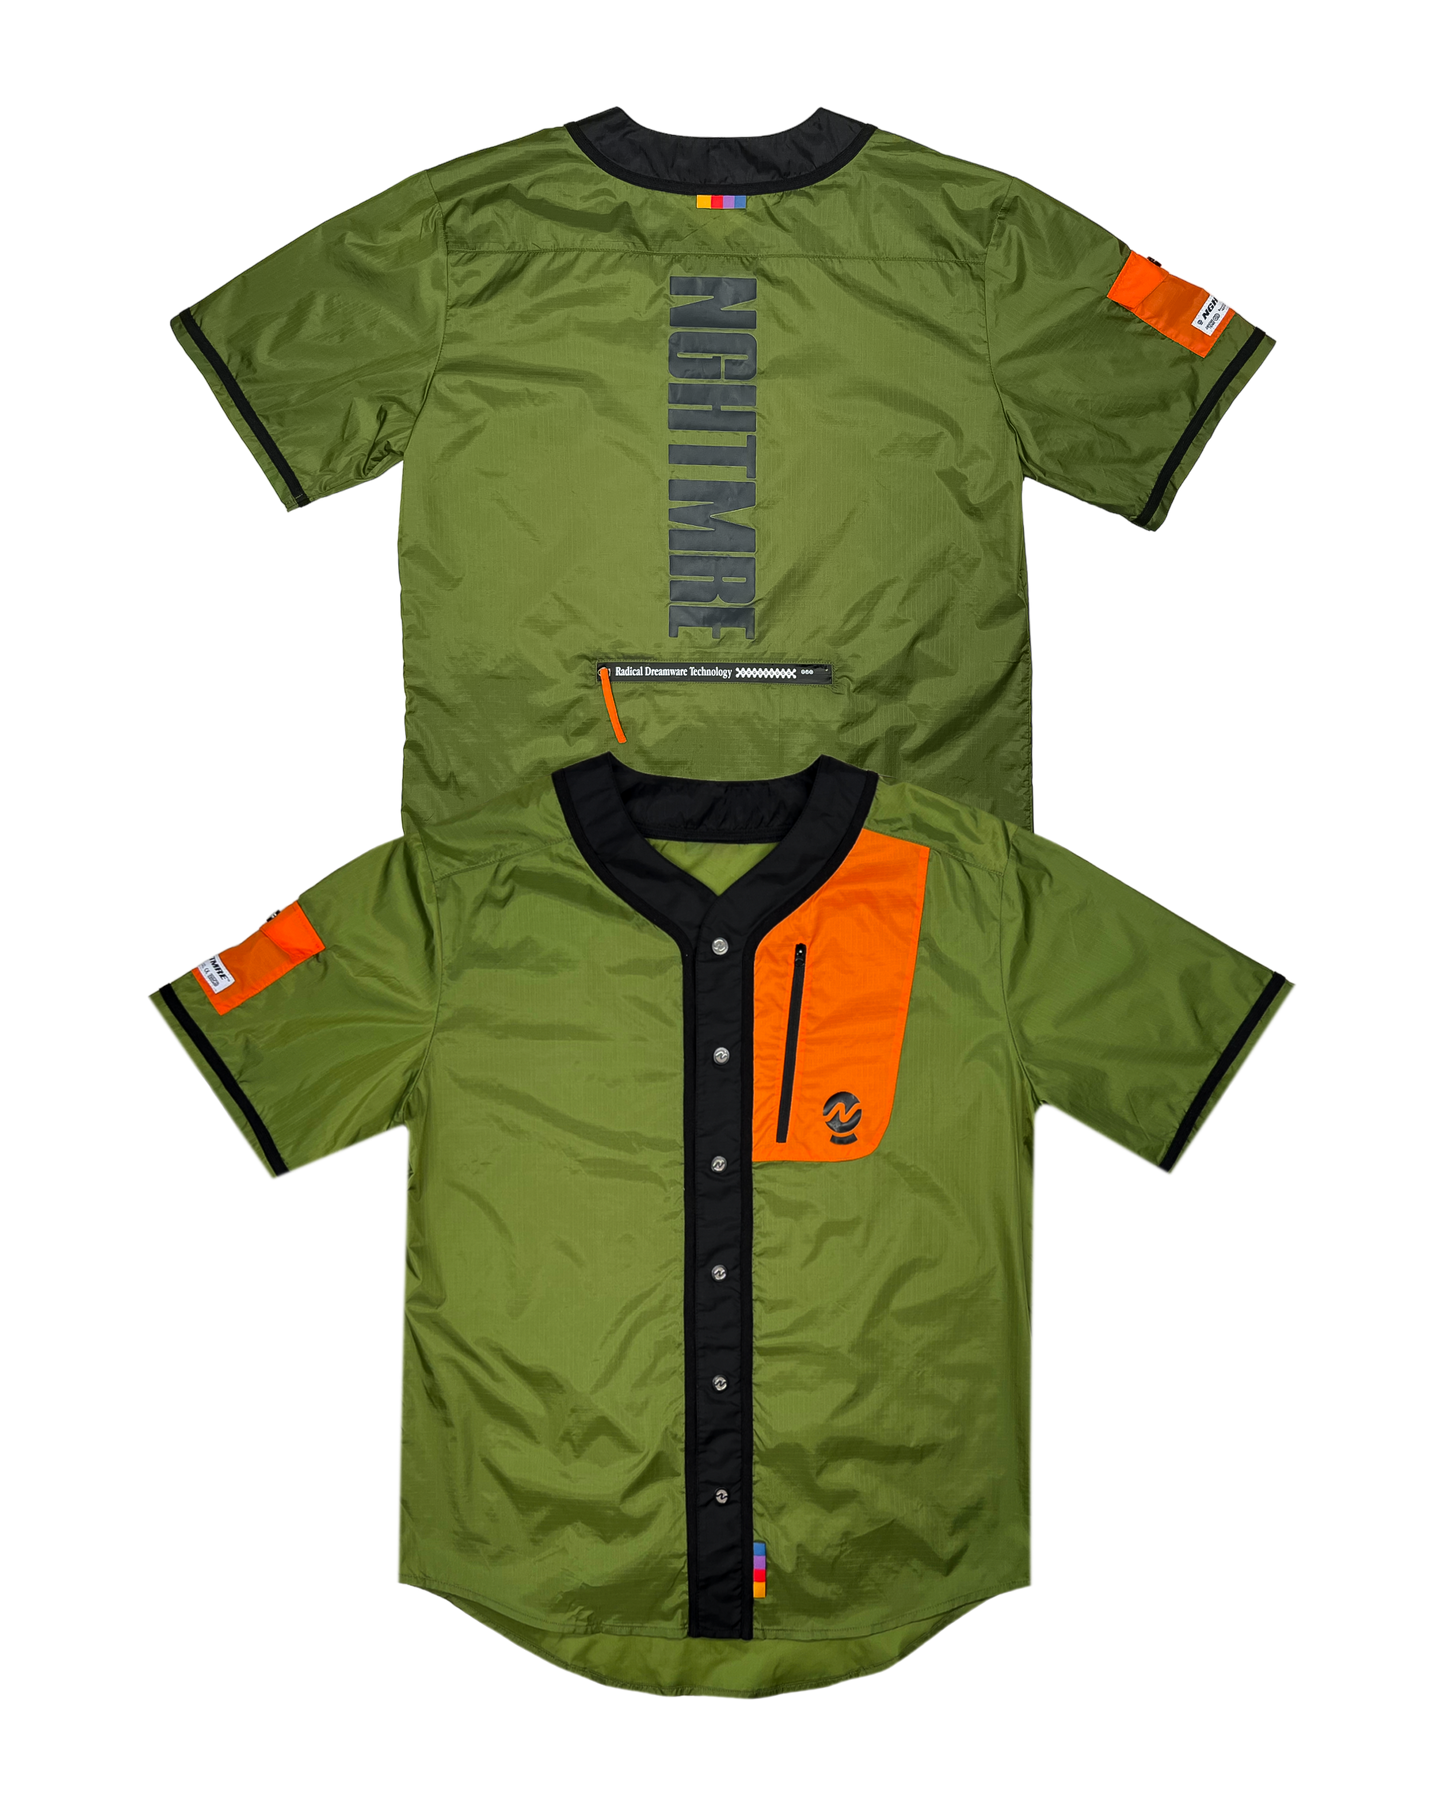 NGHTMRE - Apex Ripstop Nylon Jersey - Green / Orange